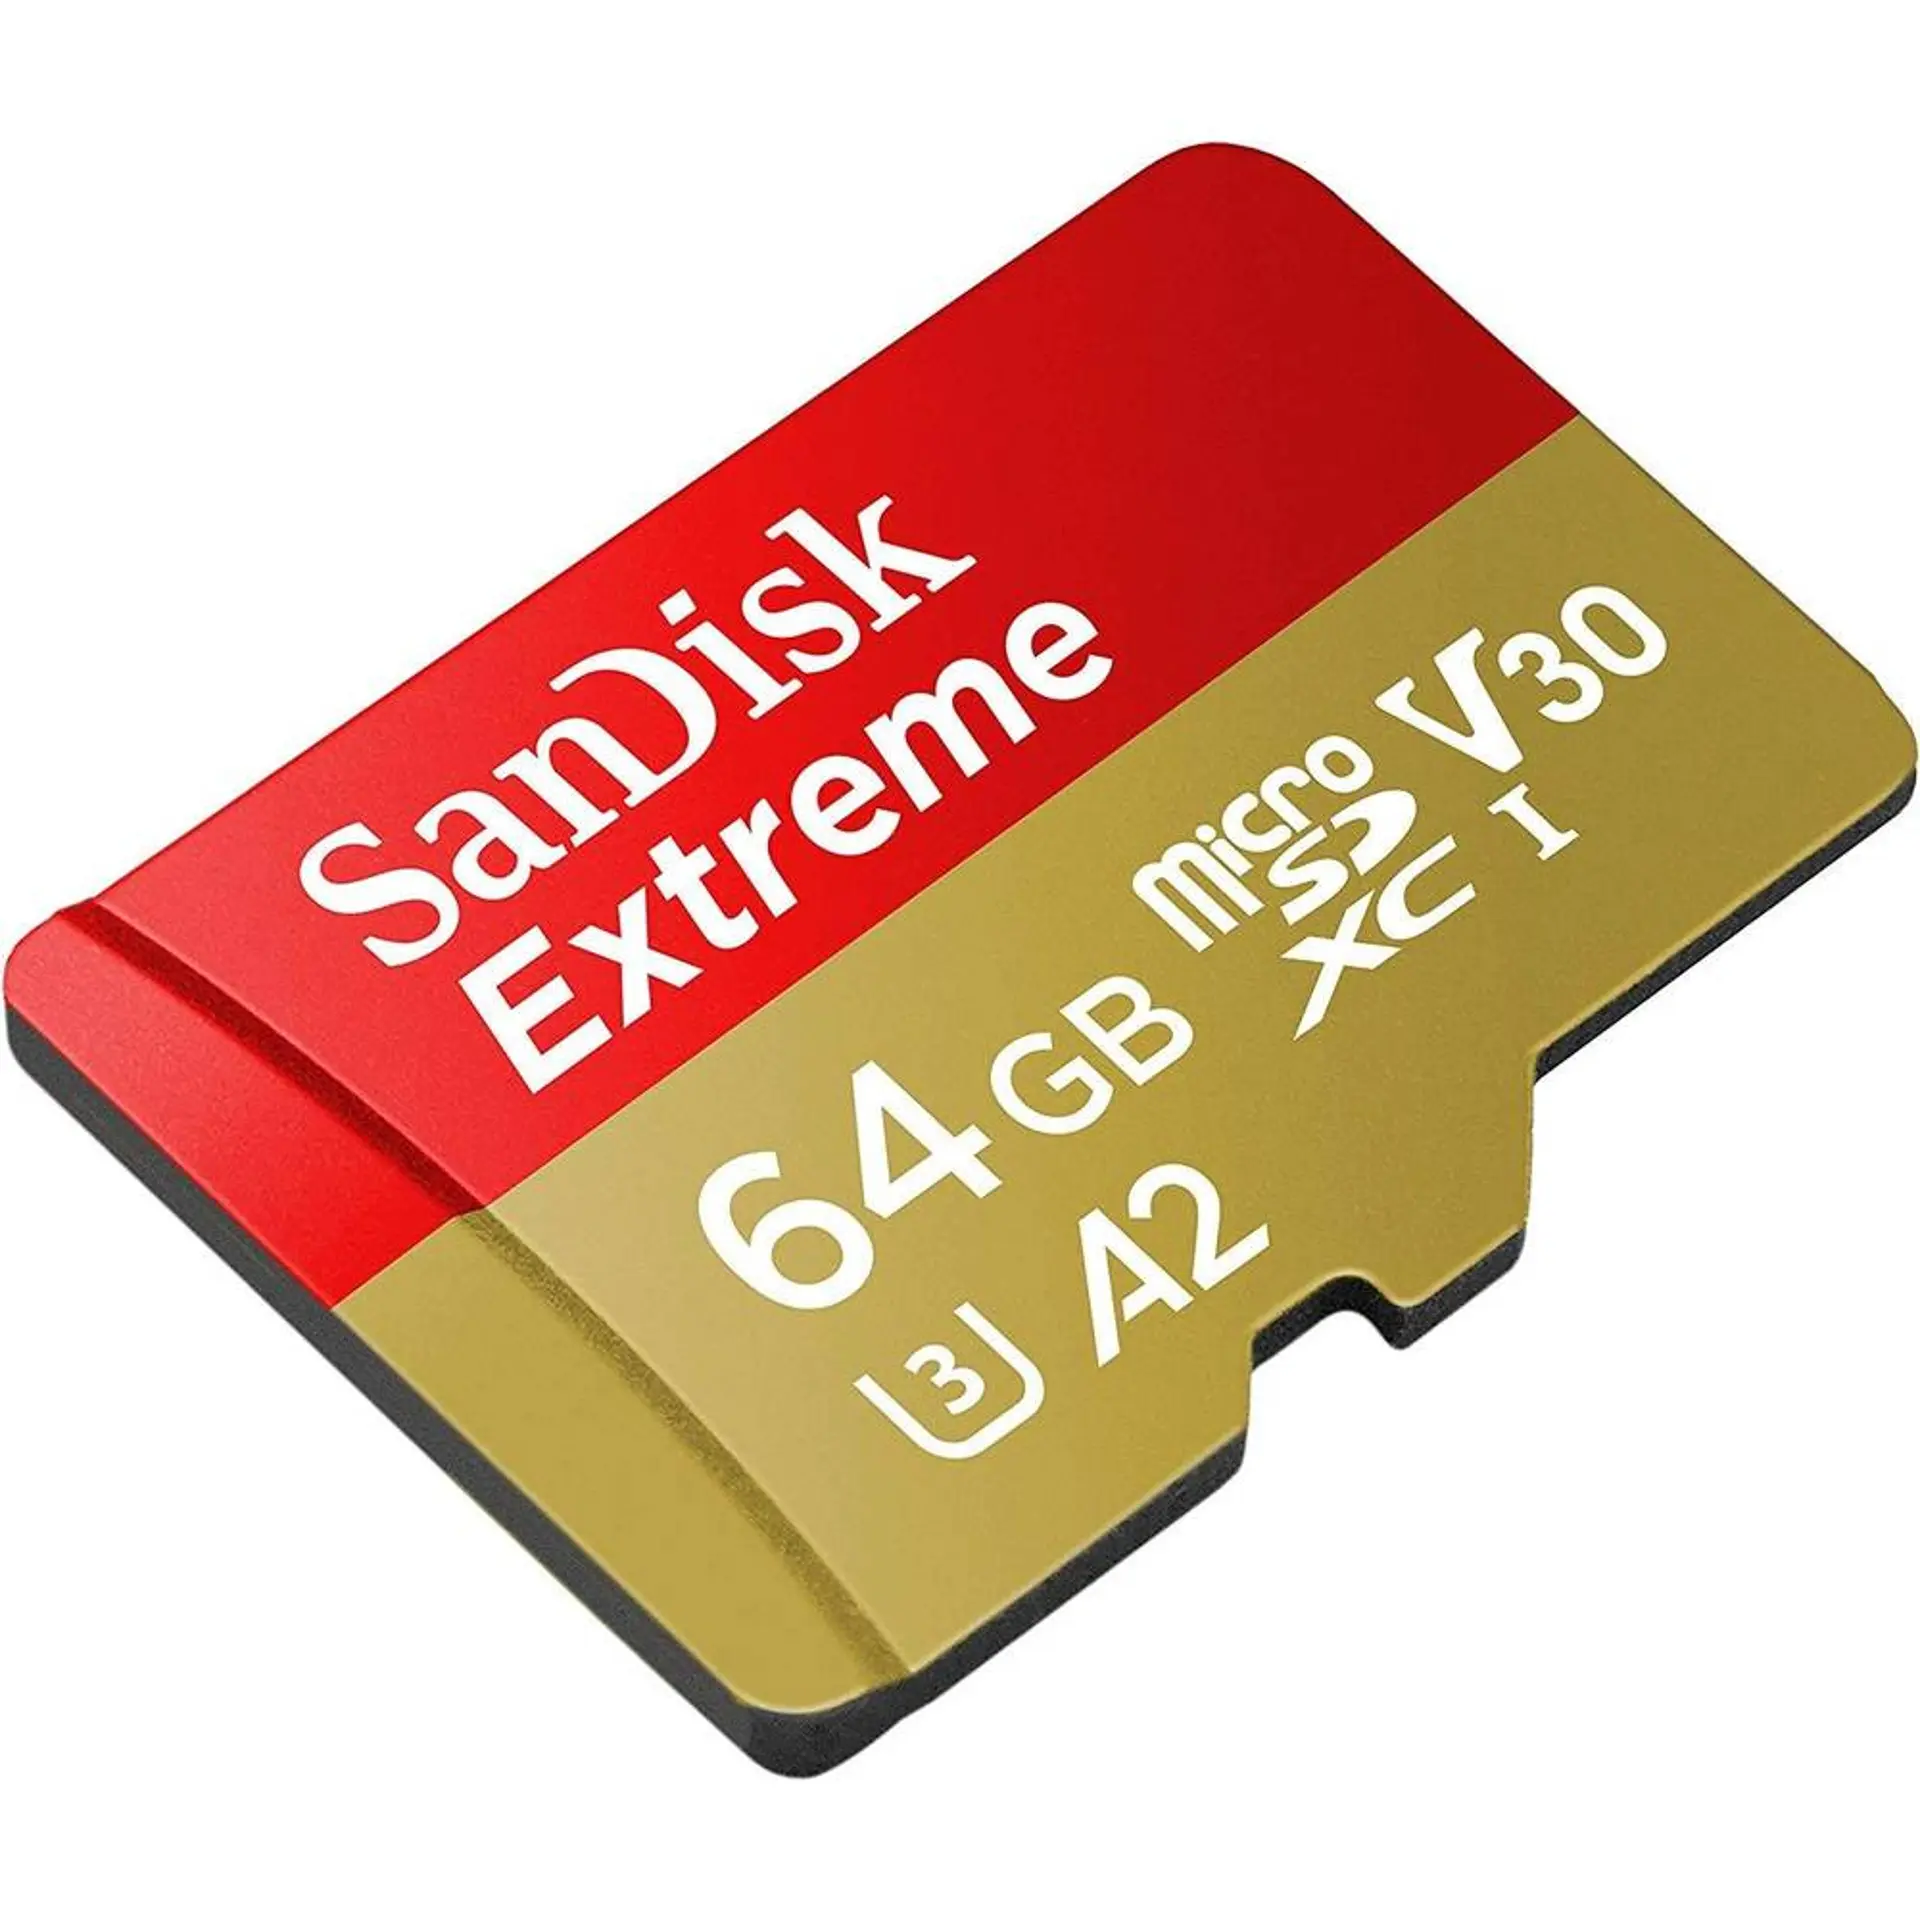 SanDisk microSDXC 64GB Extreme A2 C10 V30